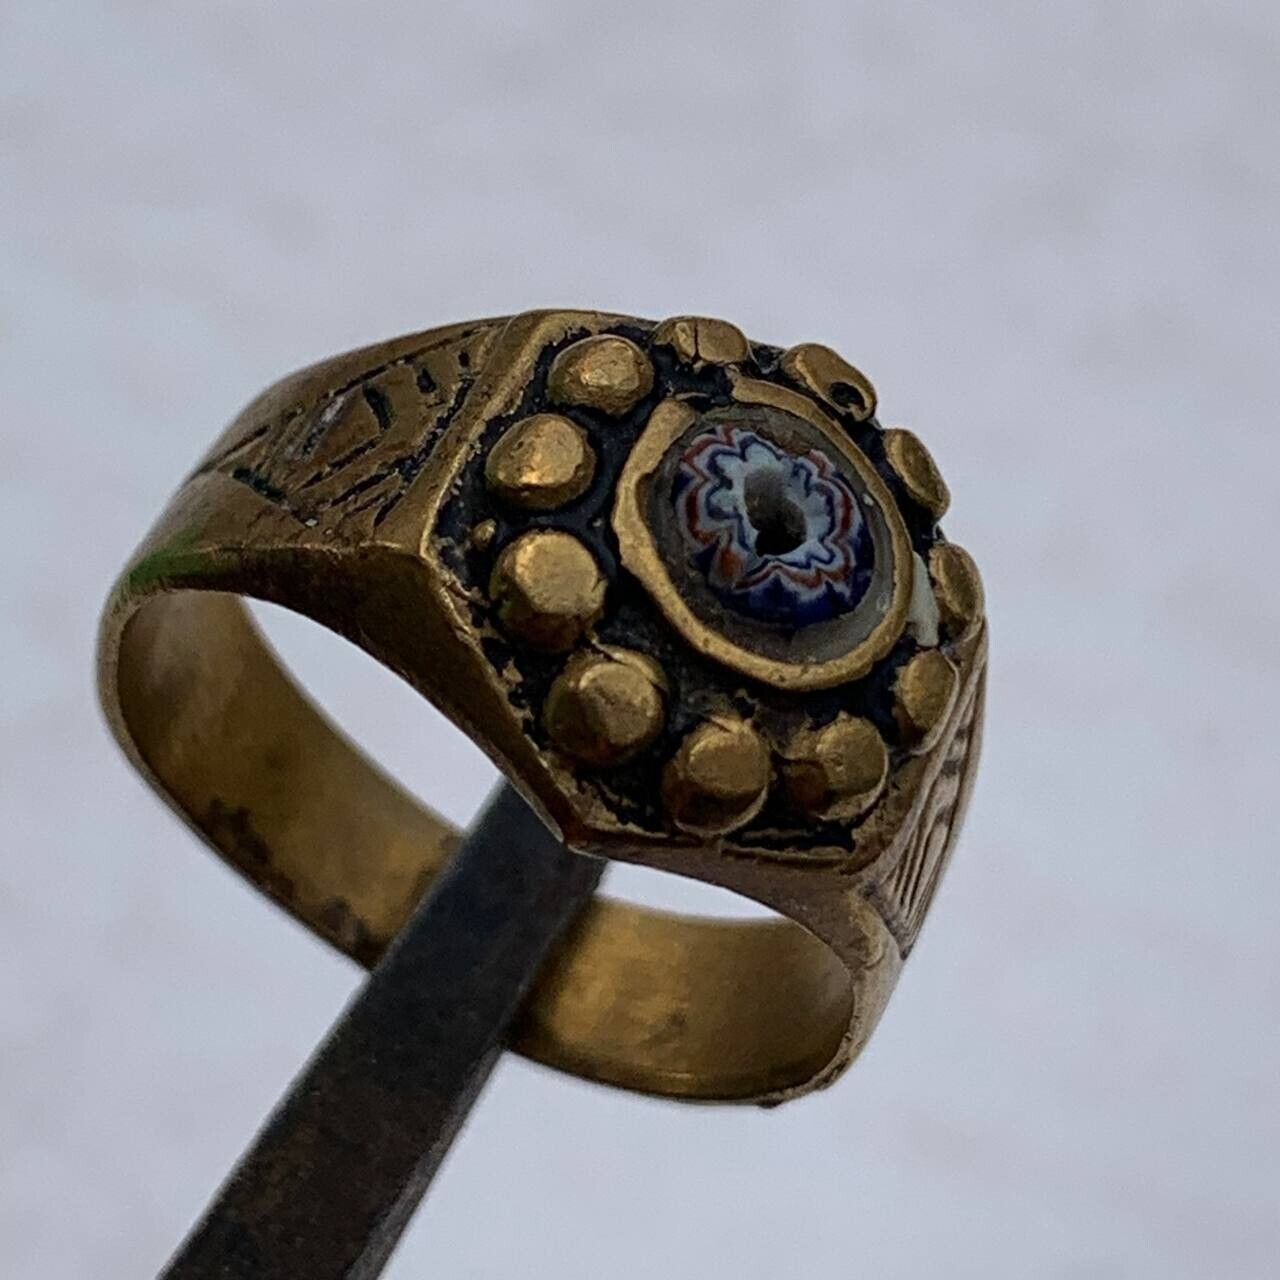 RARE ANCIENT VIKING NORSE NORDIC GOLD COLOR WEDDING RING Circa 9/11th Century